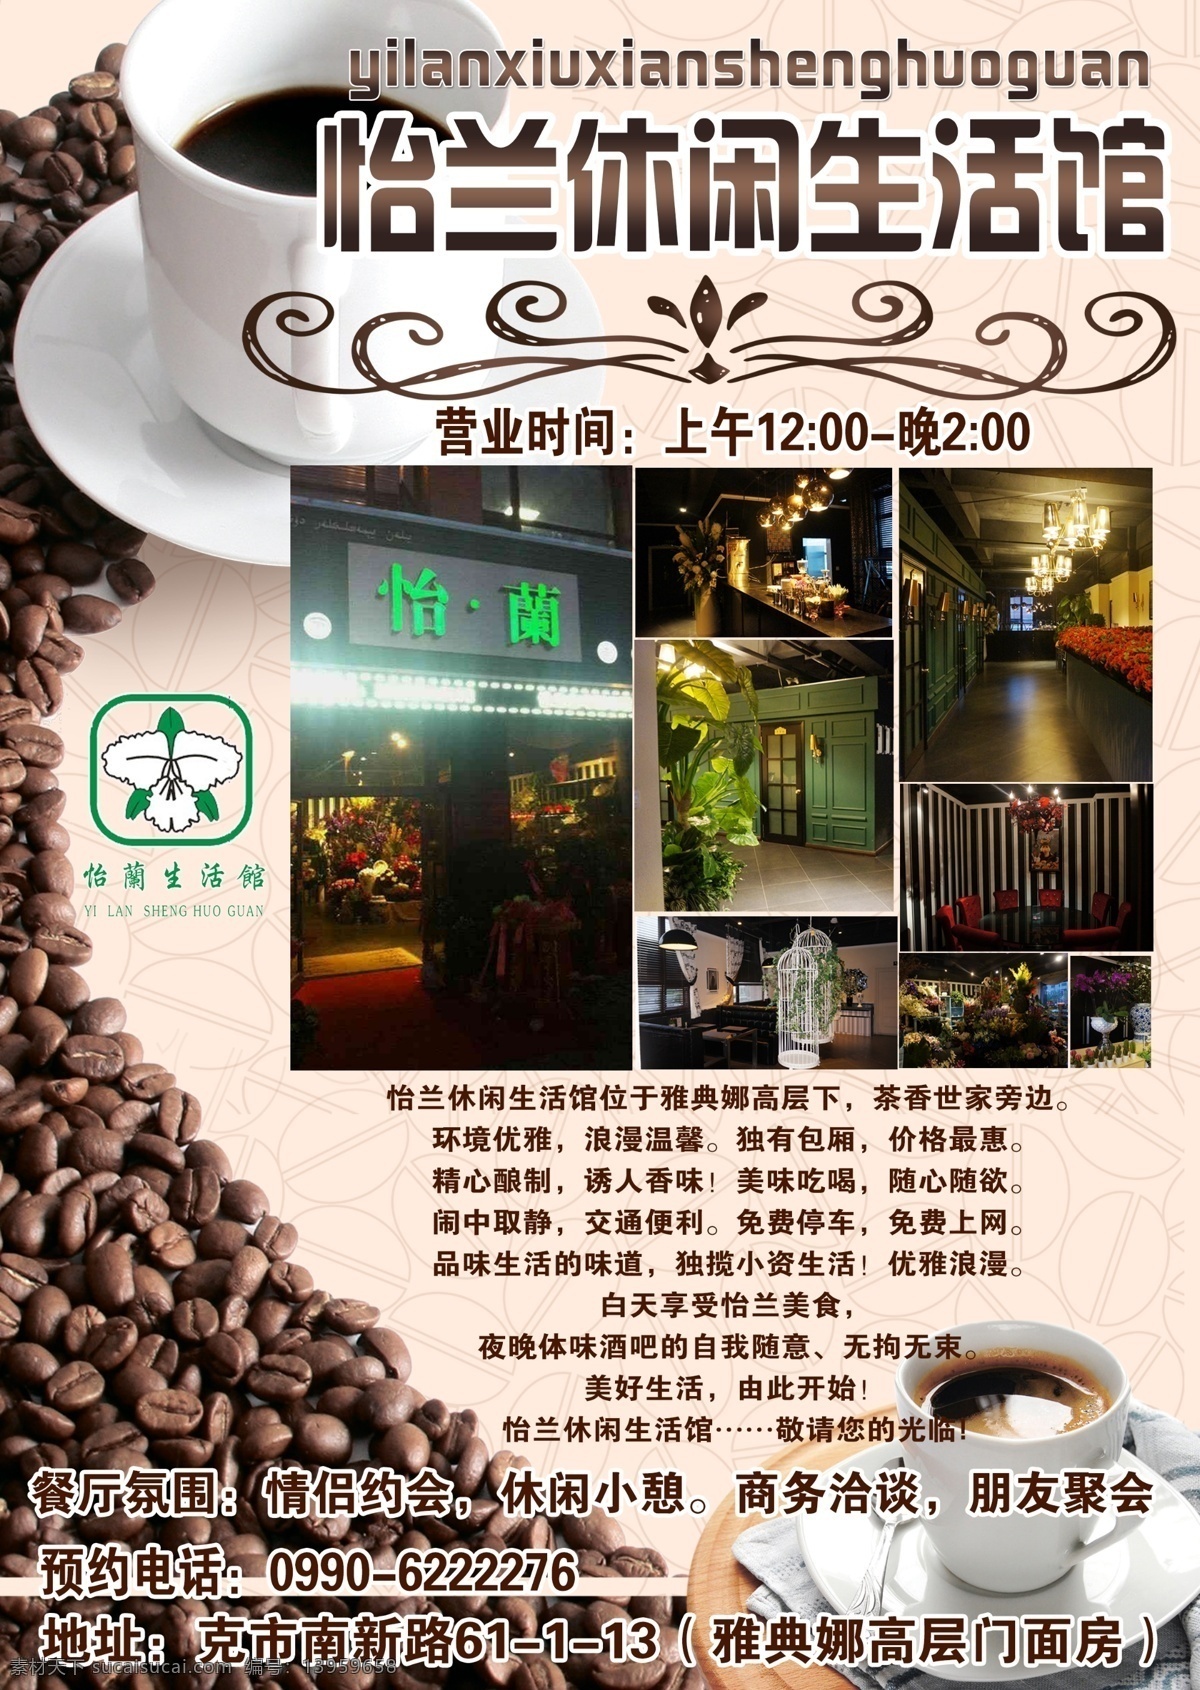 dm宣传单 广告设计模板 咖啡 咖啡豆 生活 休闲 源文件 彩页 模板下载 咖啡彩页 海报 宣传海报 宣传单 dm